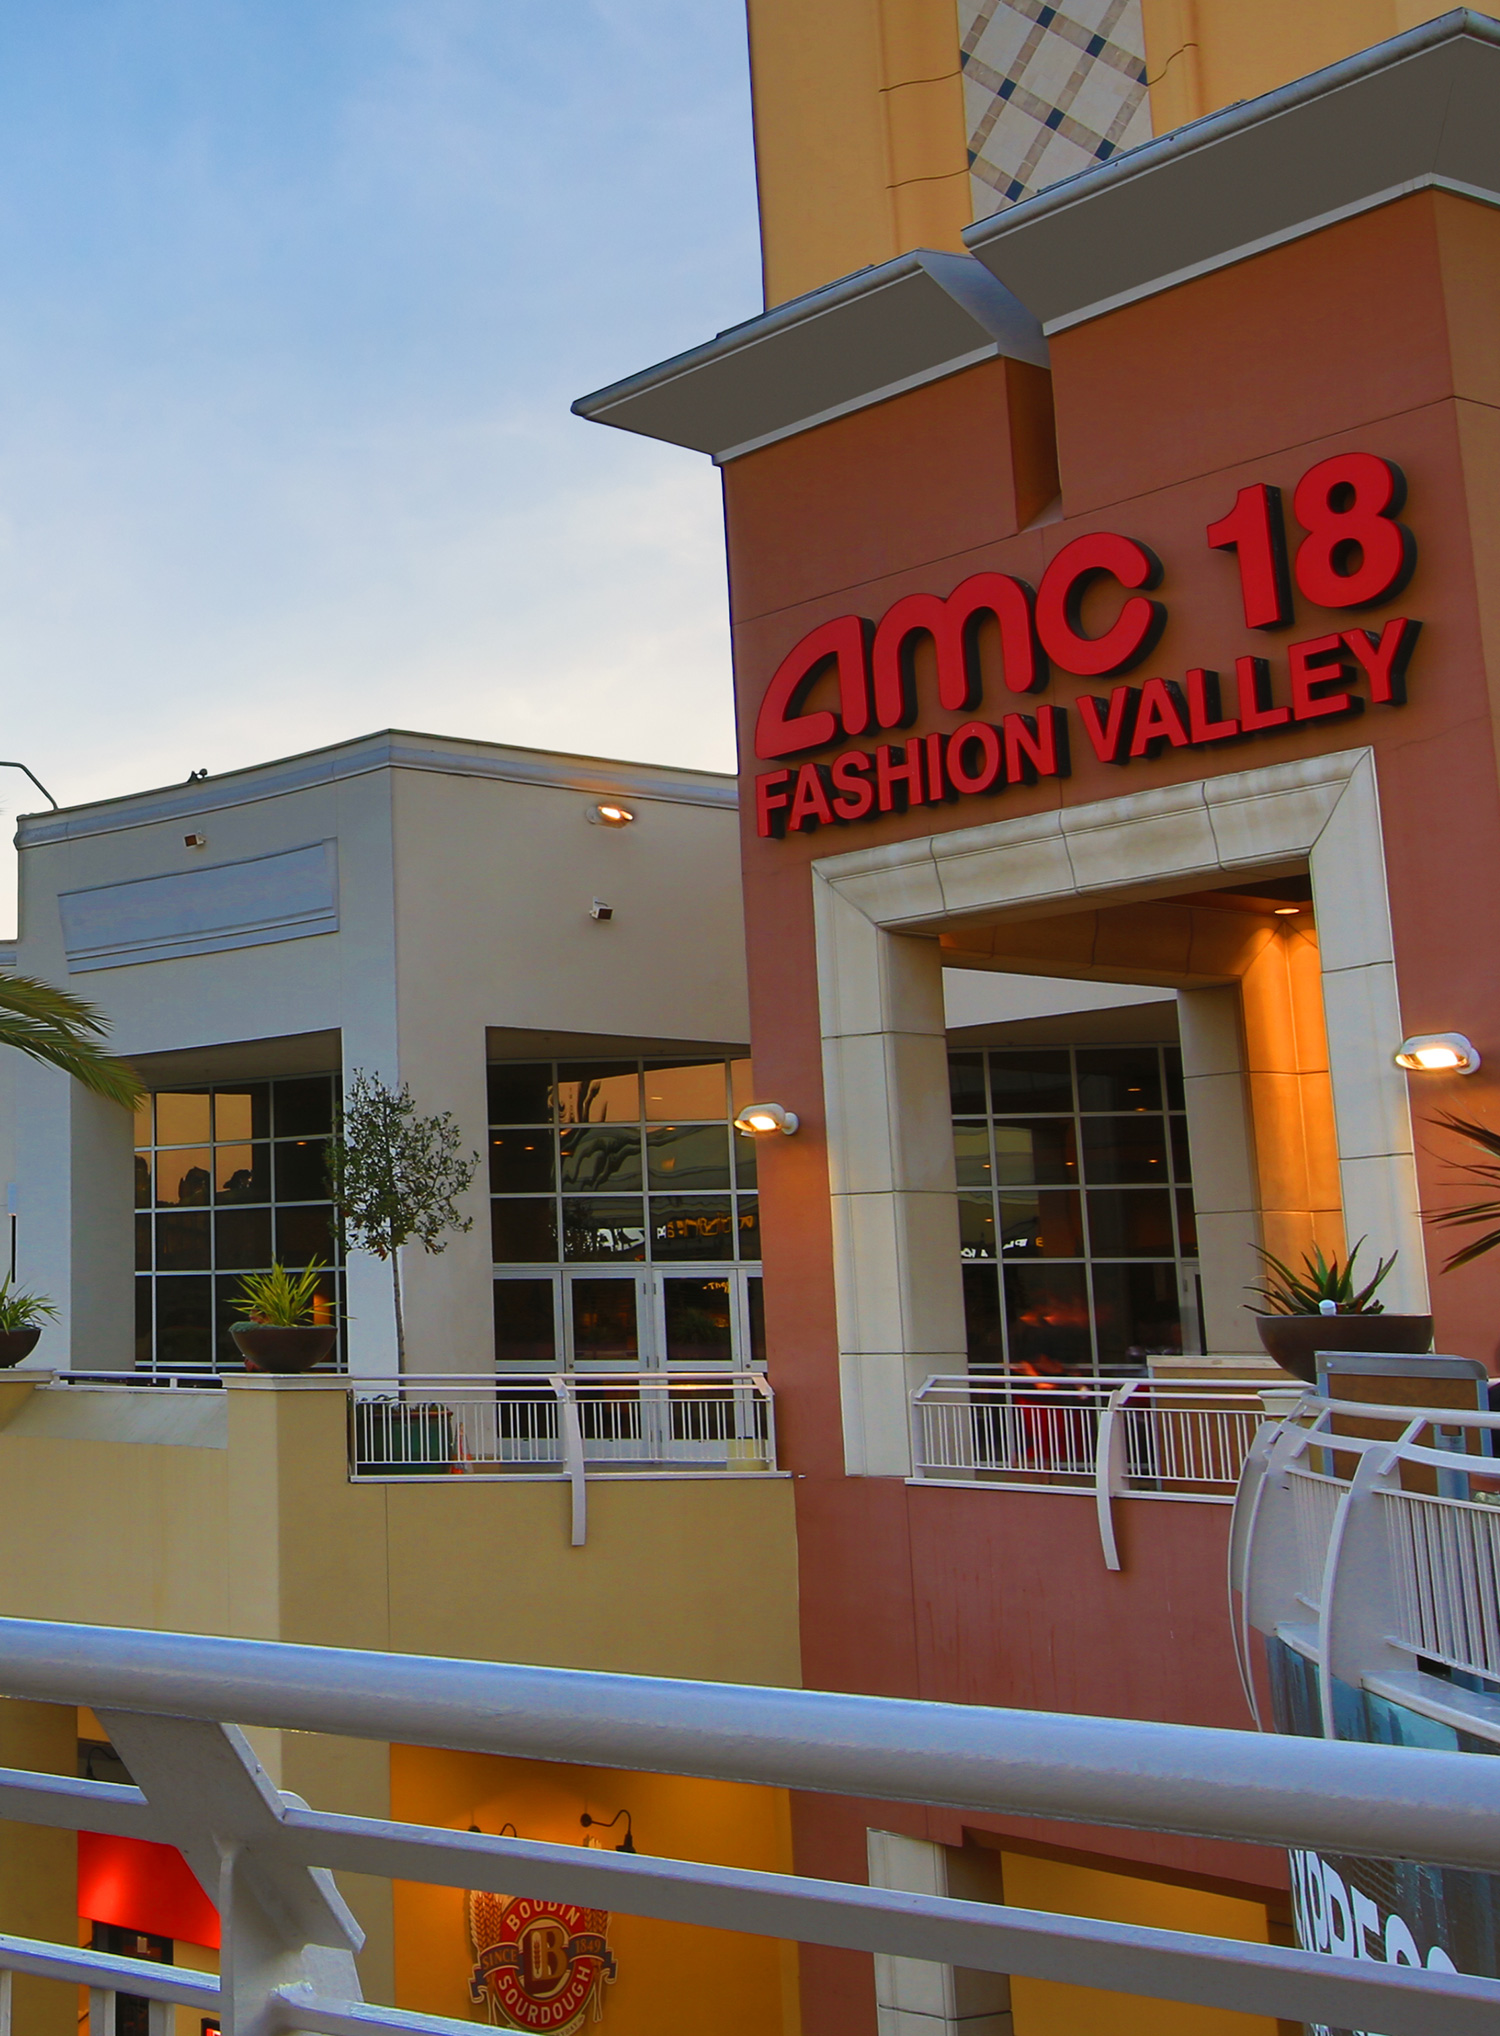 Top 10 Best Fashion Valley Food Court near Mission Valley, San